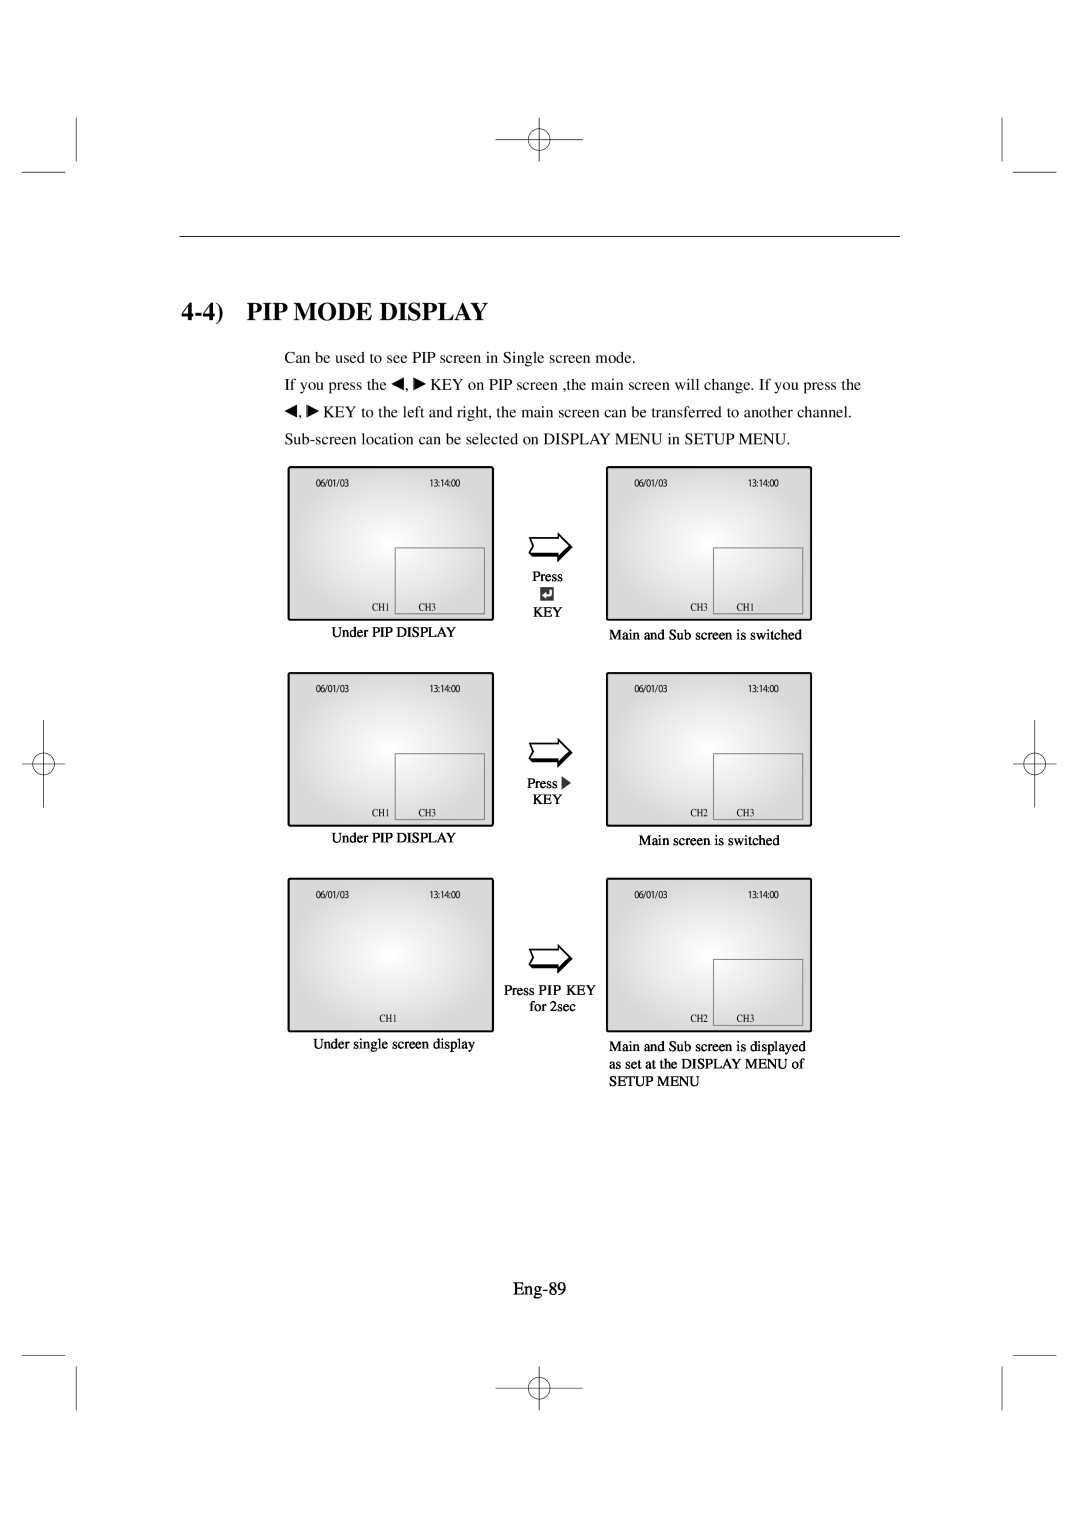 Samsung SSC17WEB manual 4-4PIP MODE DISPLAY, Eng-89 